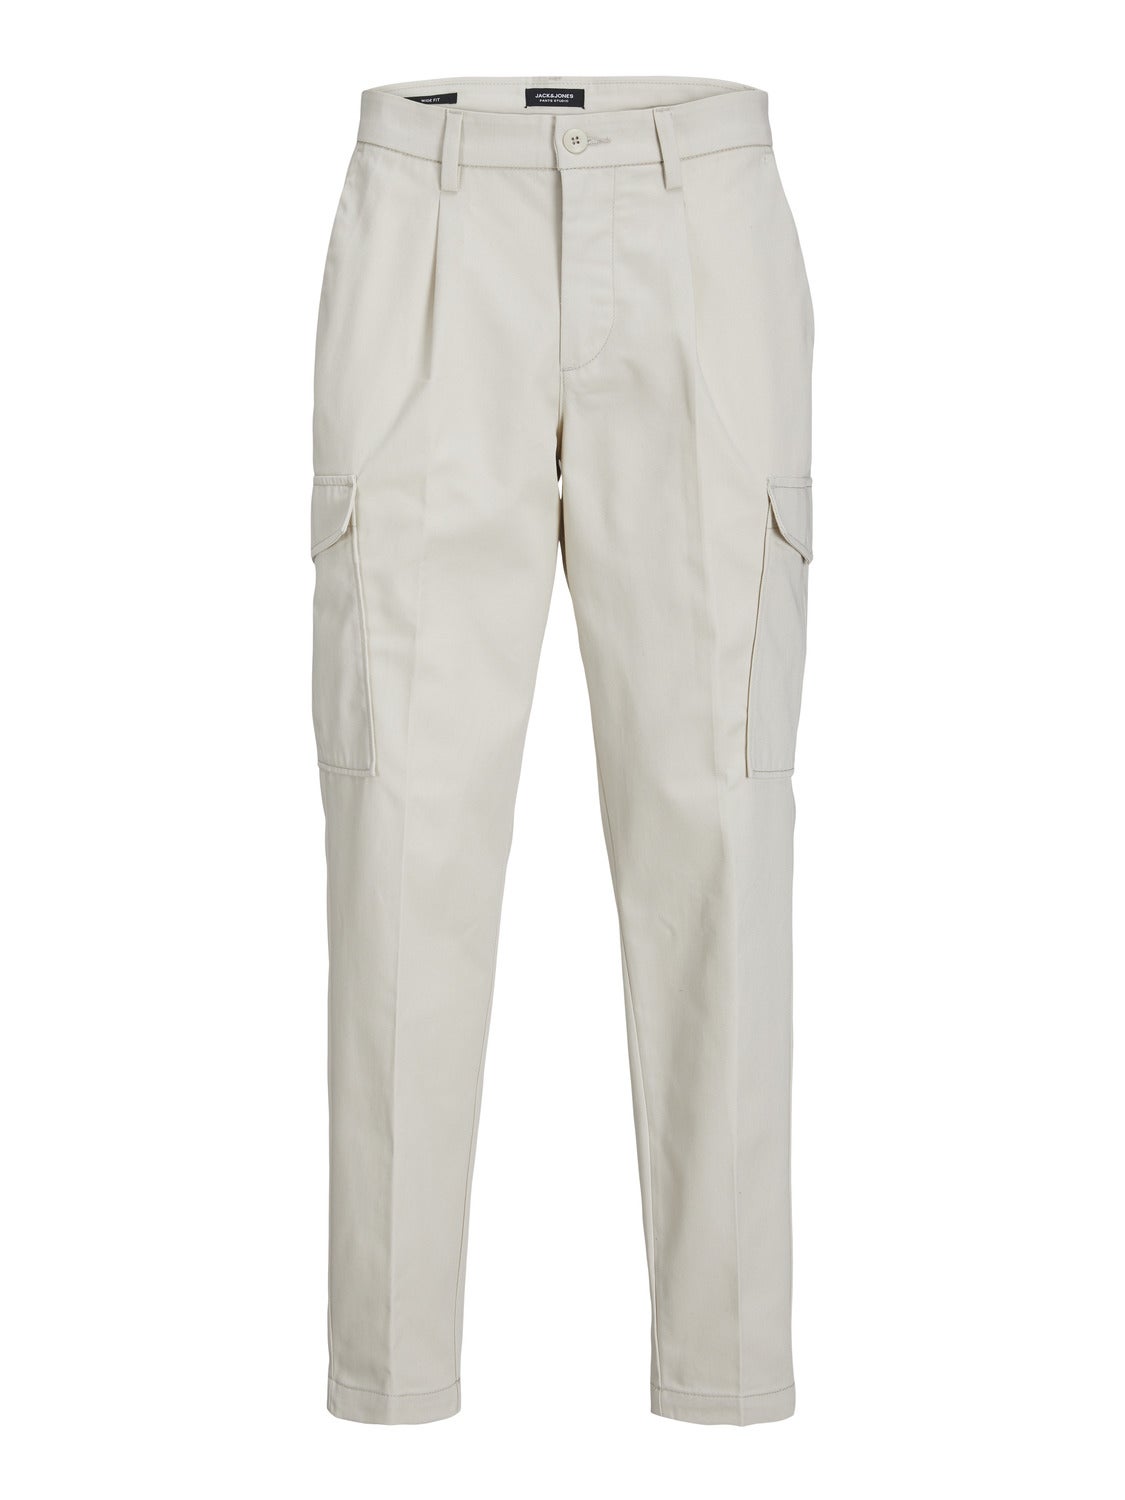 Plus Size 2-pack Slim Fit Chino trousers | Black | Jack & Jones®